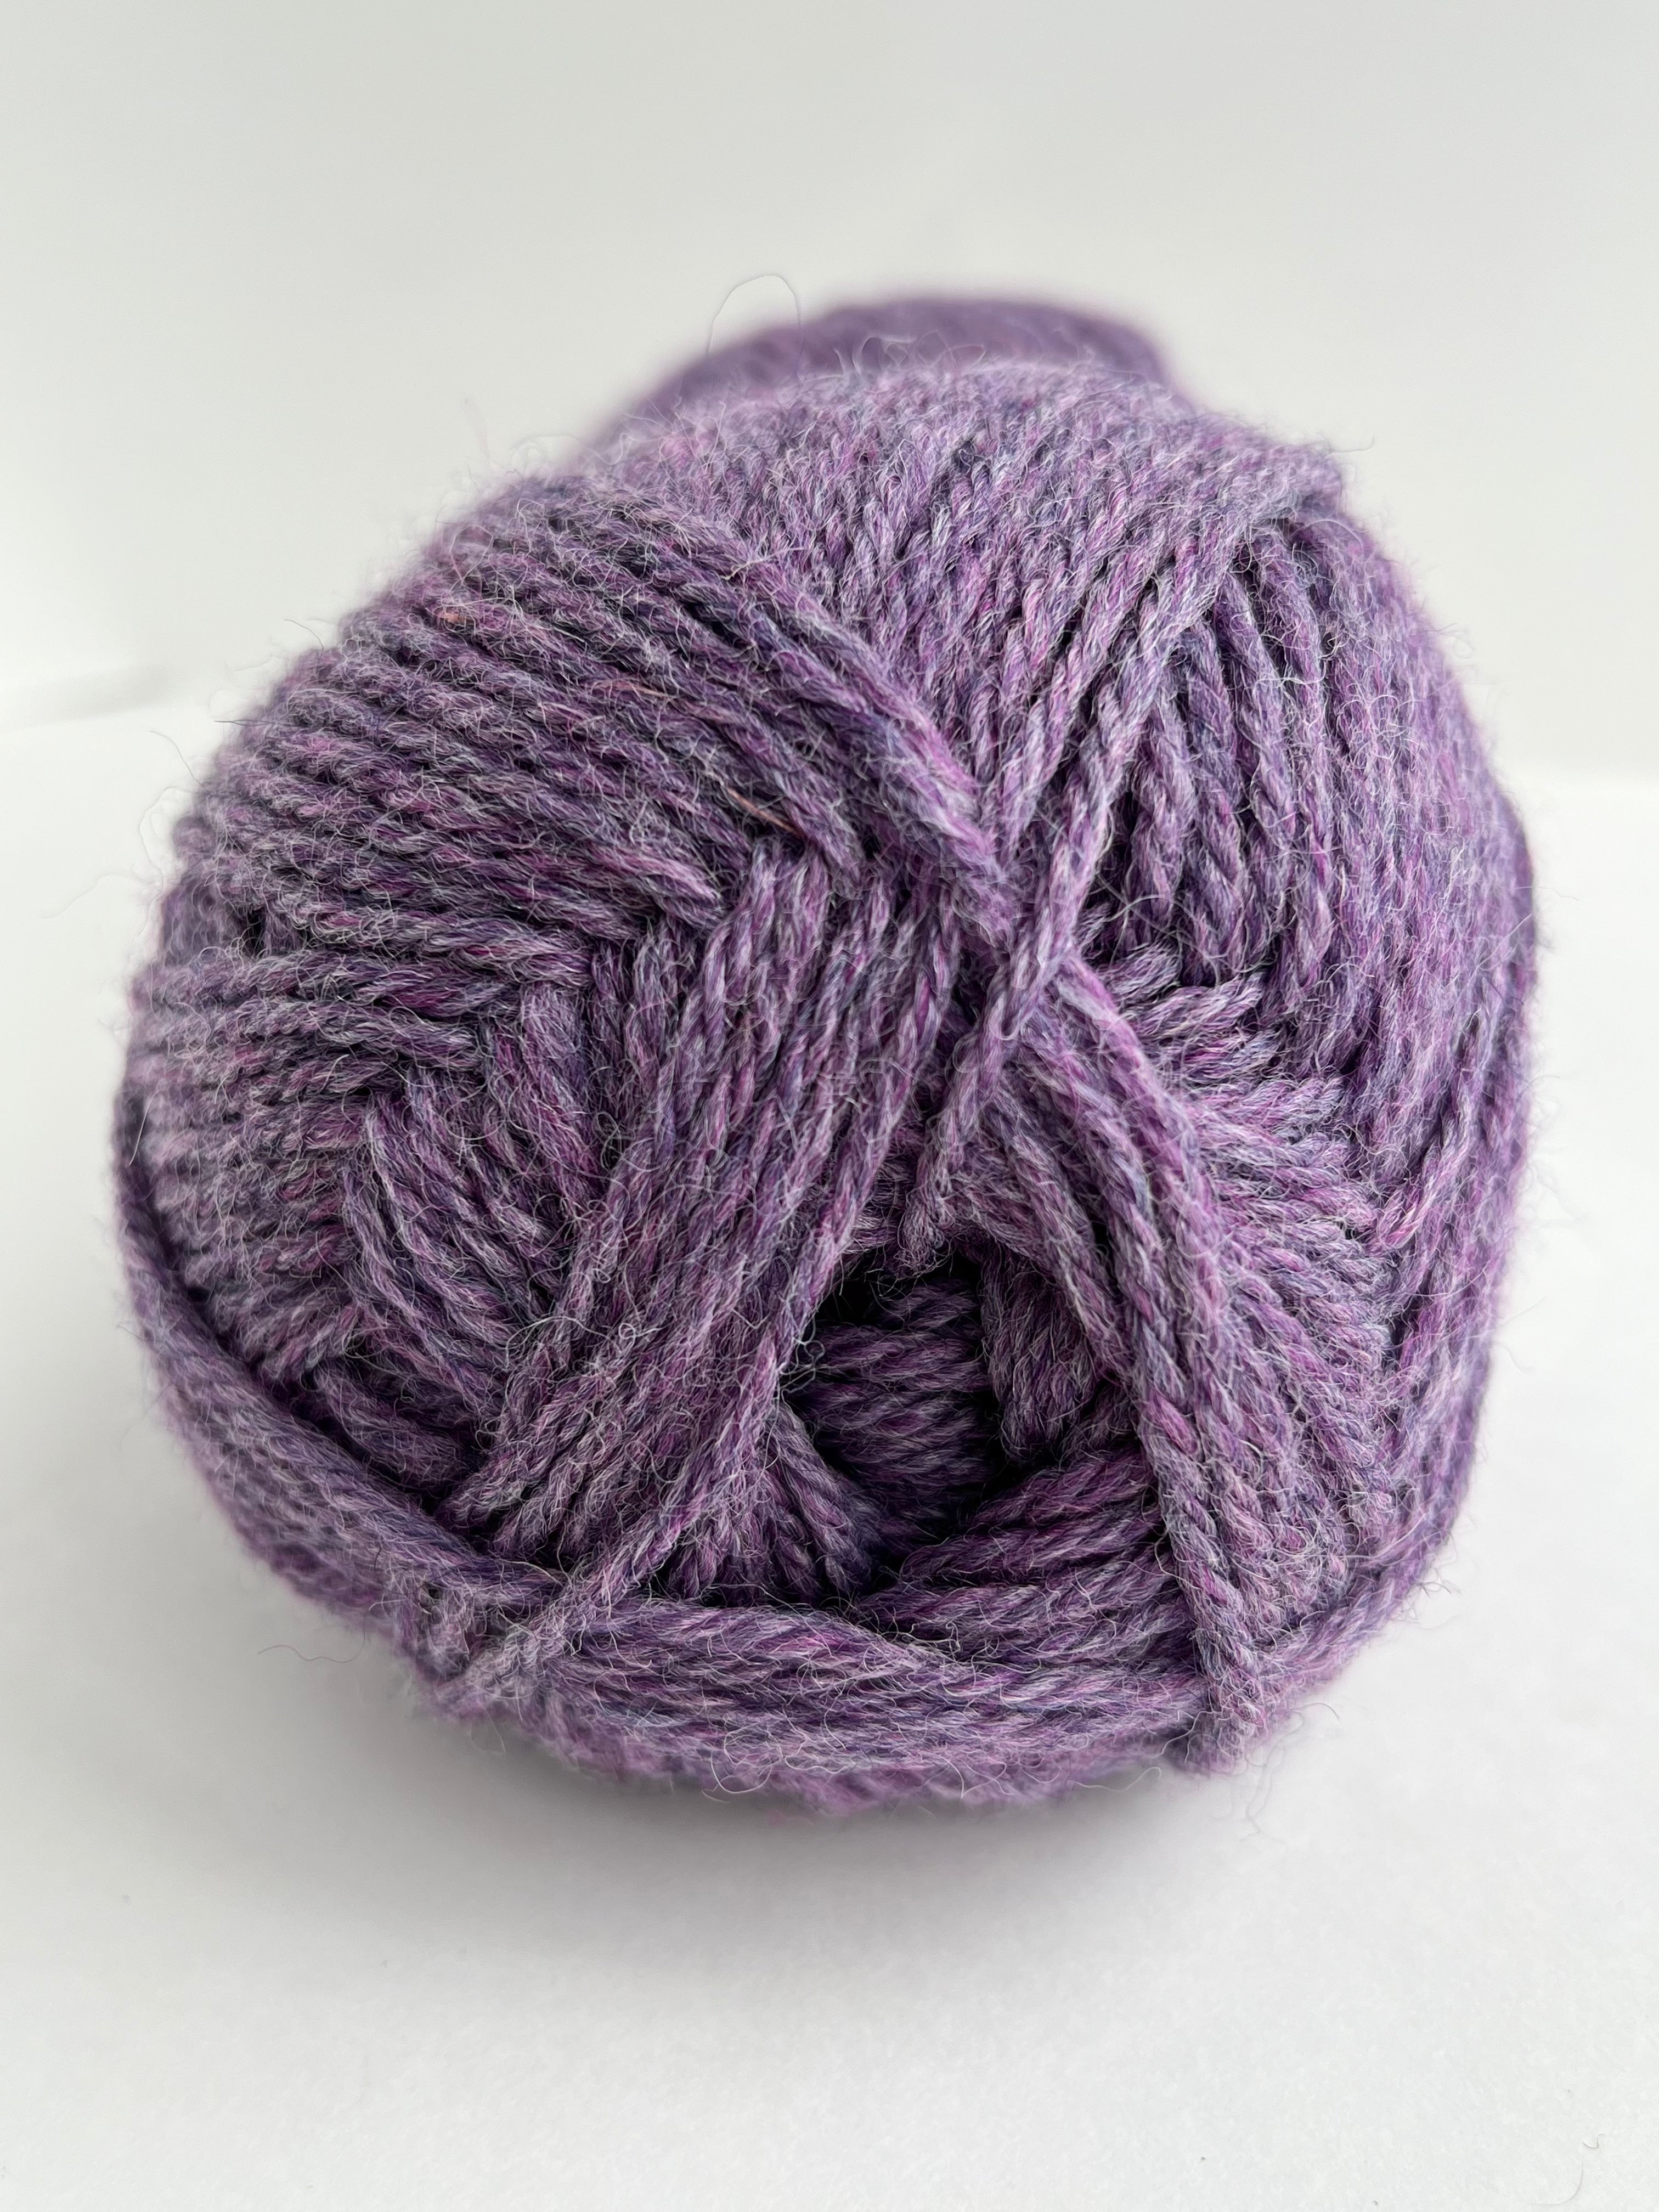 Lavender 95125 - Lanas from Berroco